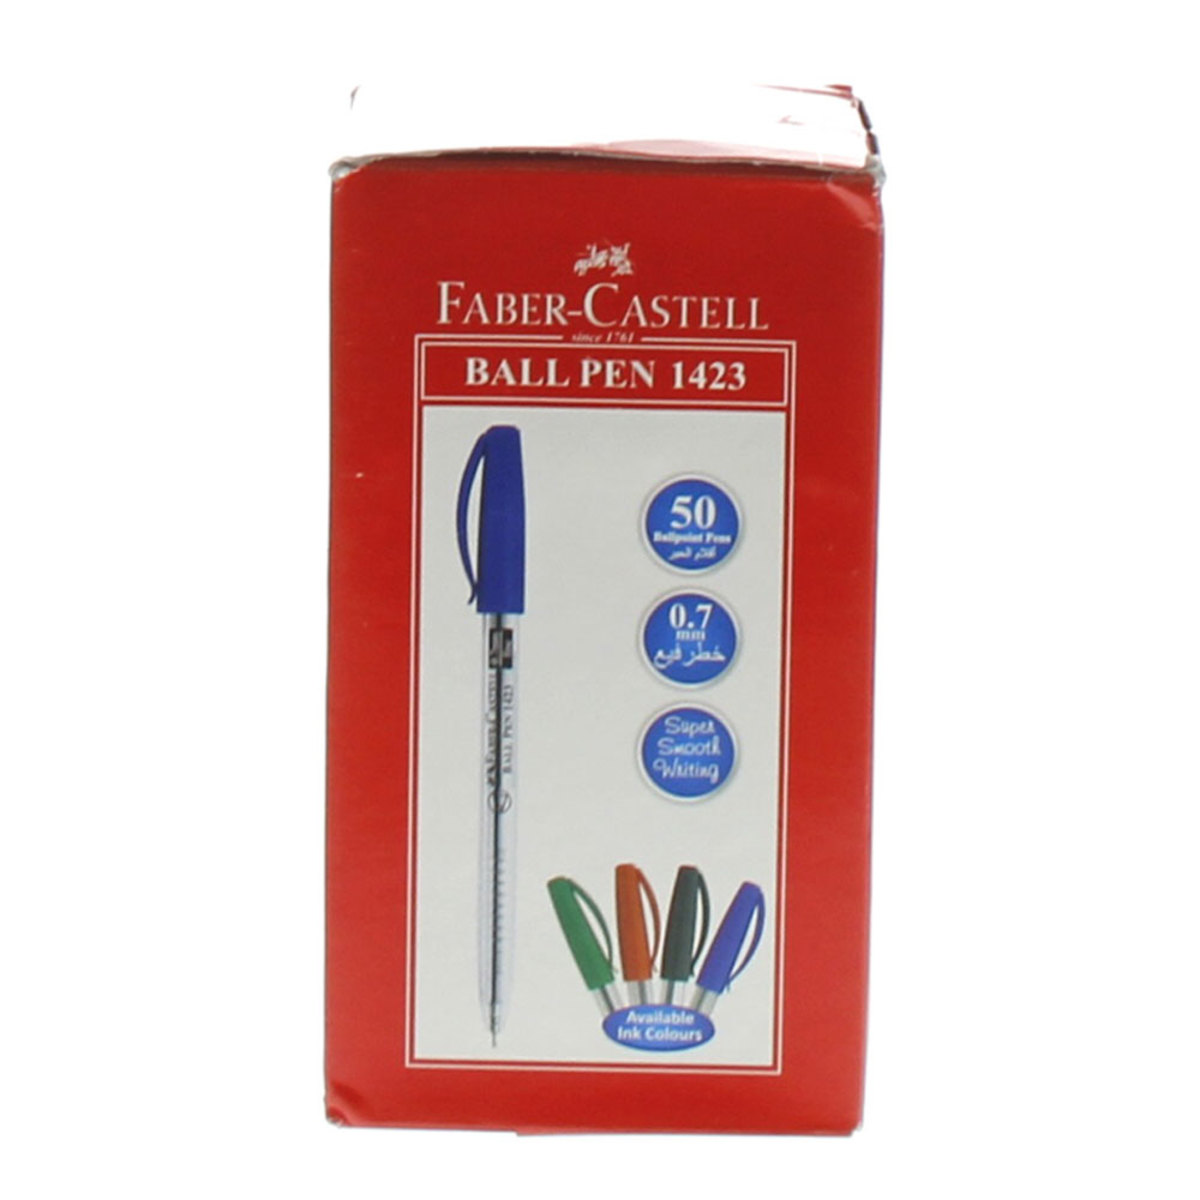 Faber-Castell Ball Pen 1423 50pc+5pc